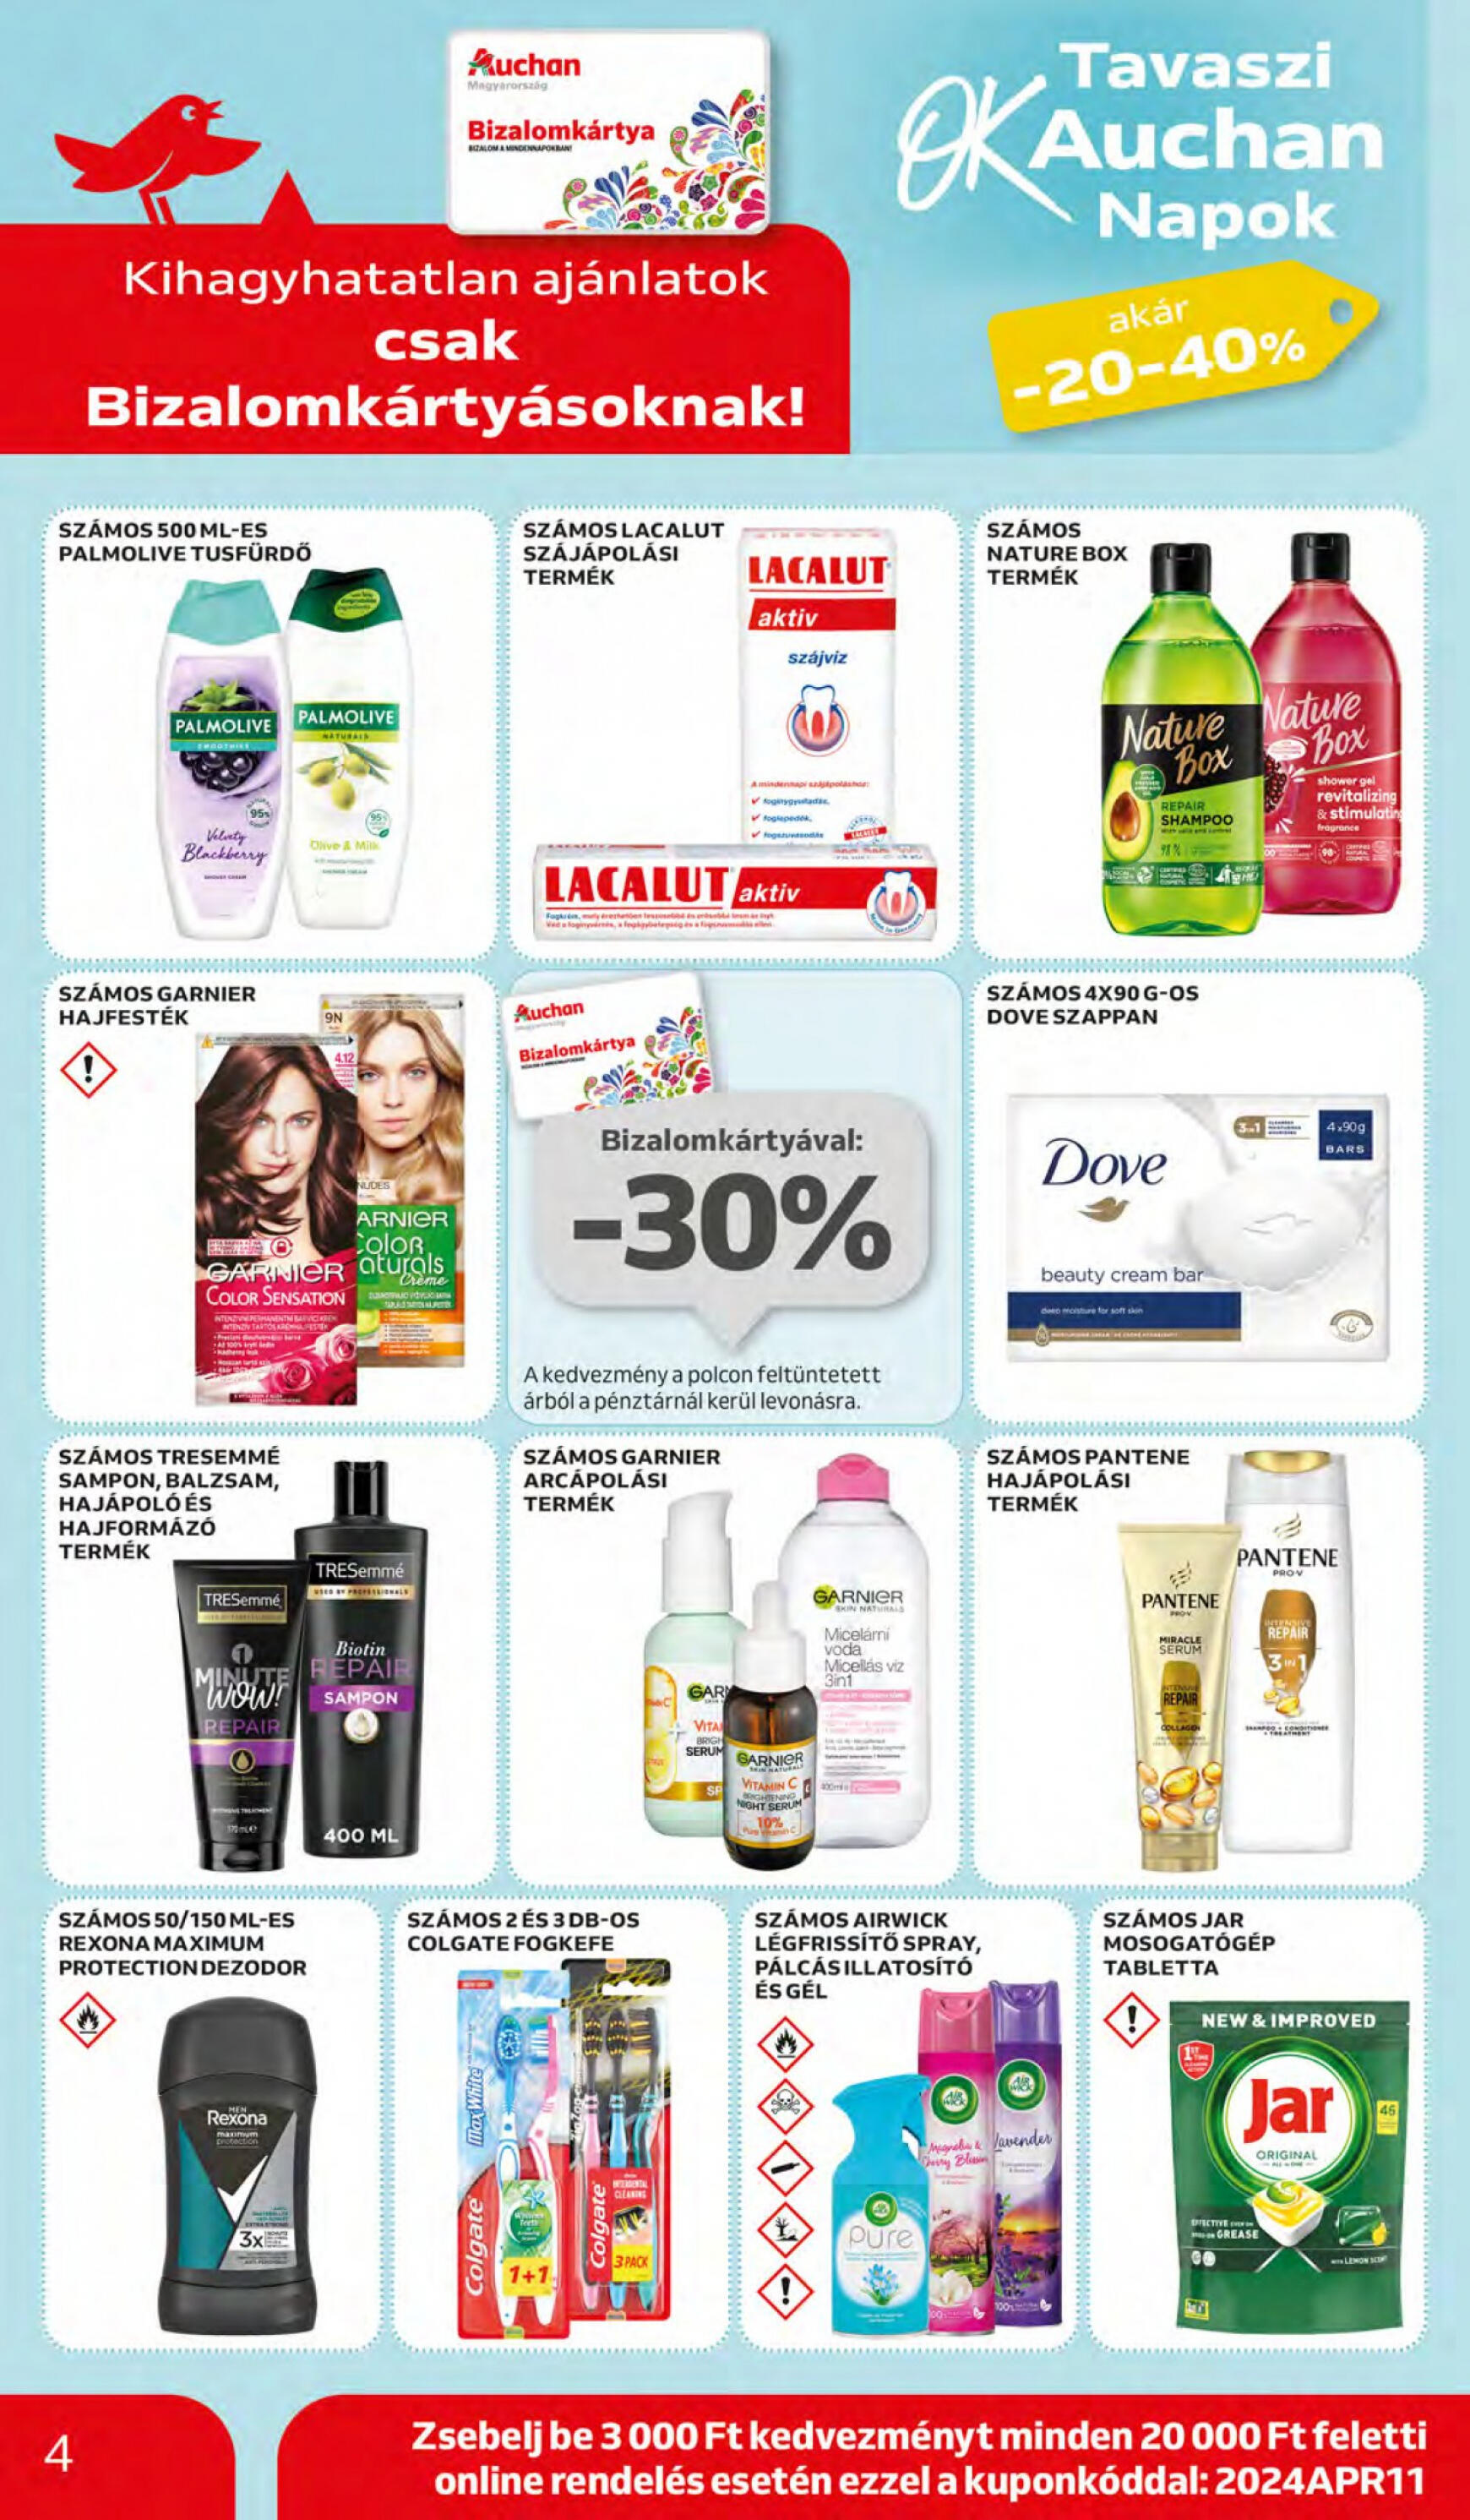 auchan - Aktuális újság Auchan 04.11. - 04.17. - page: 4